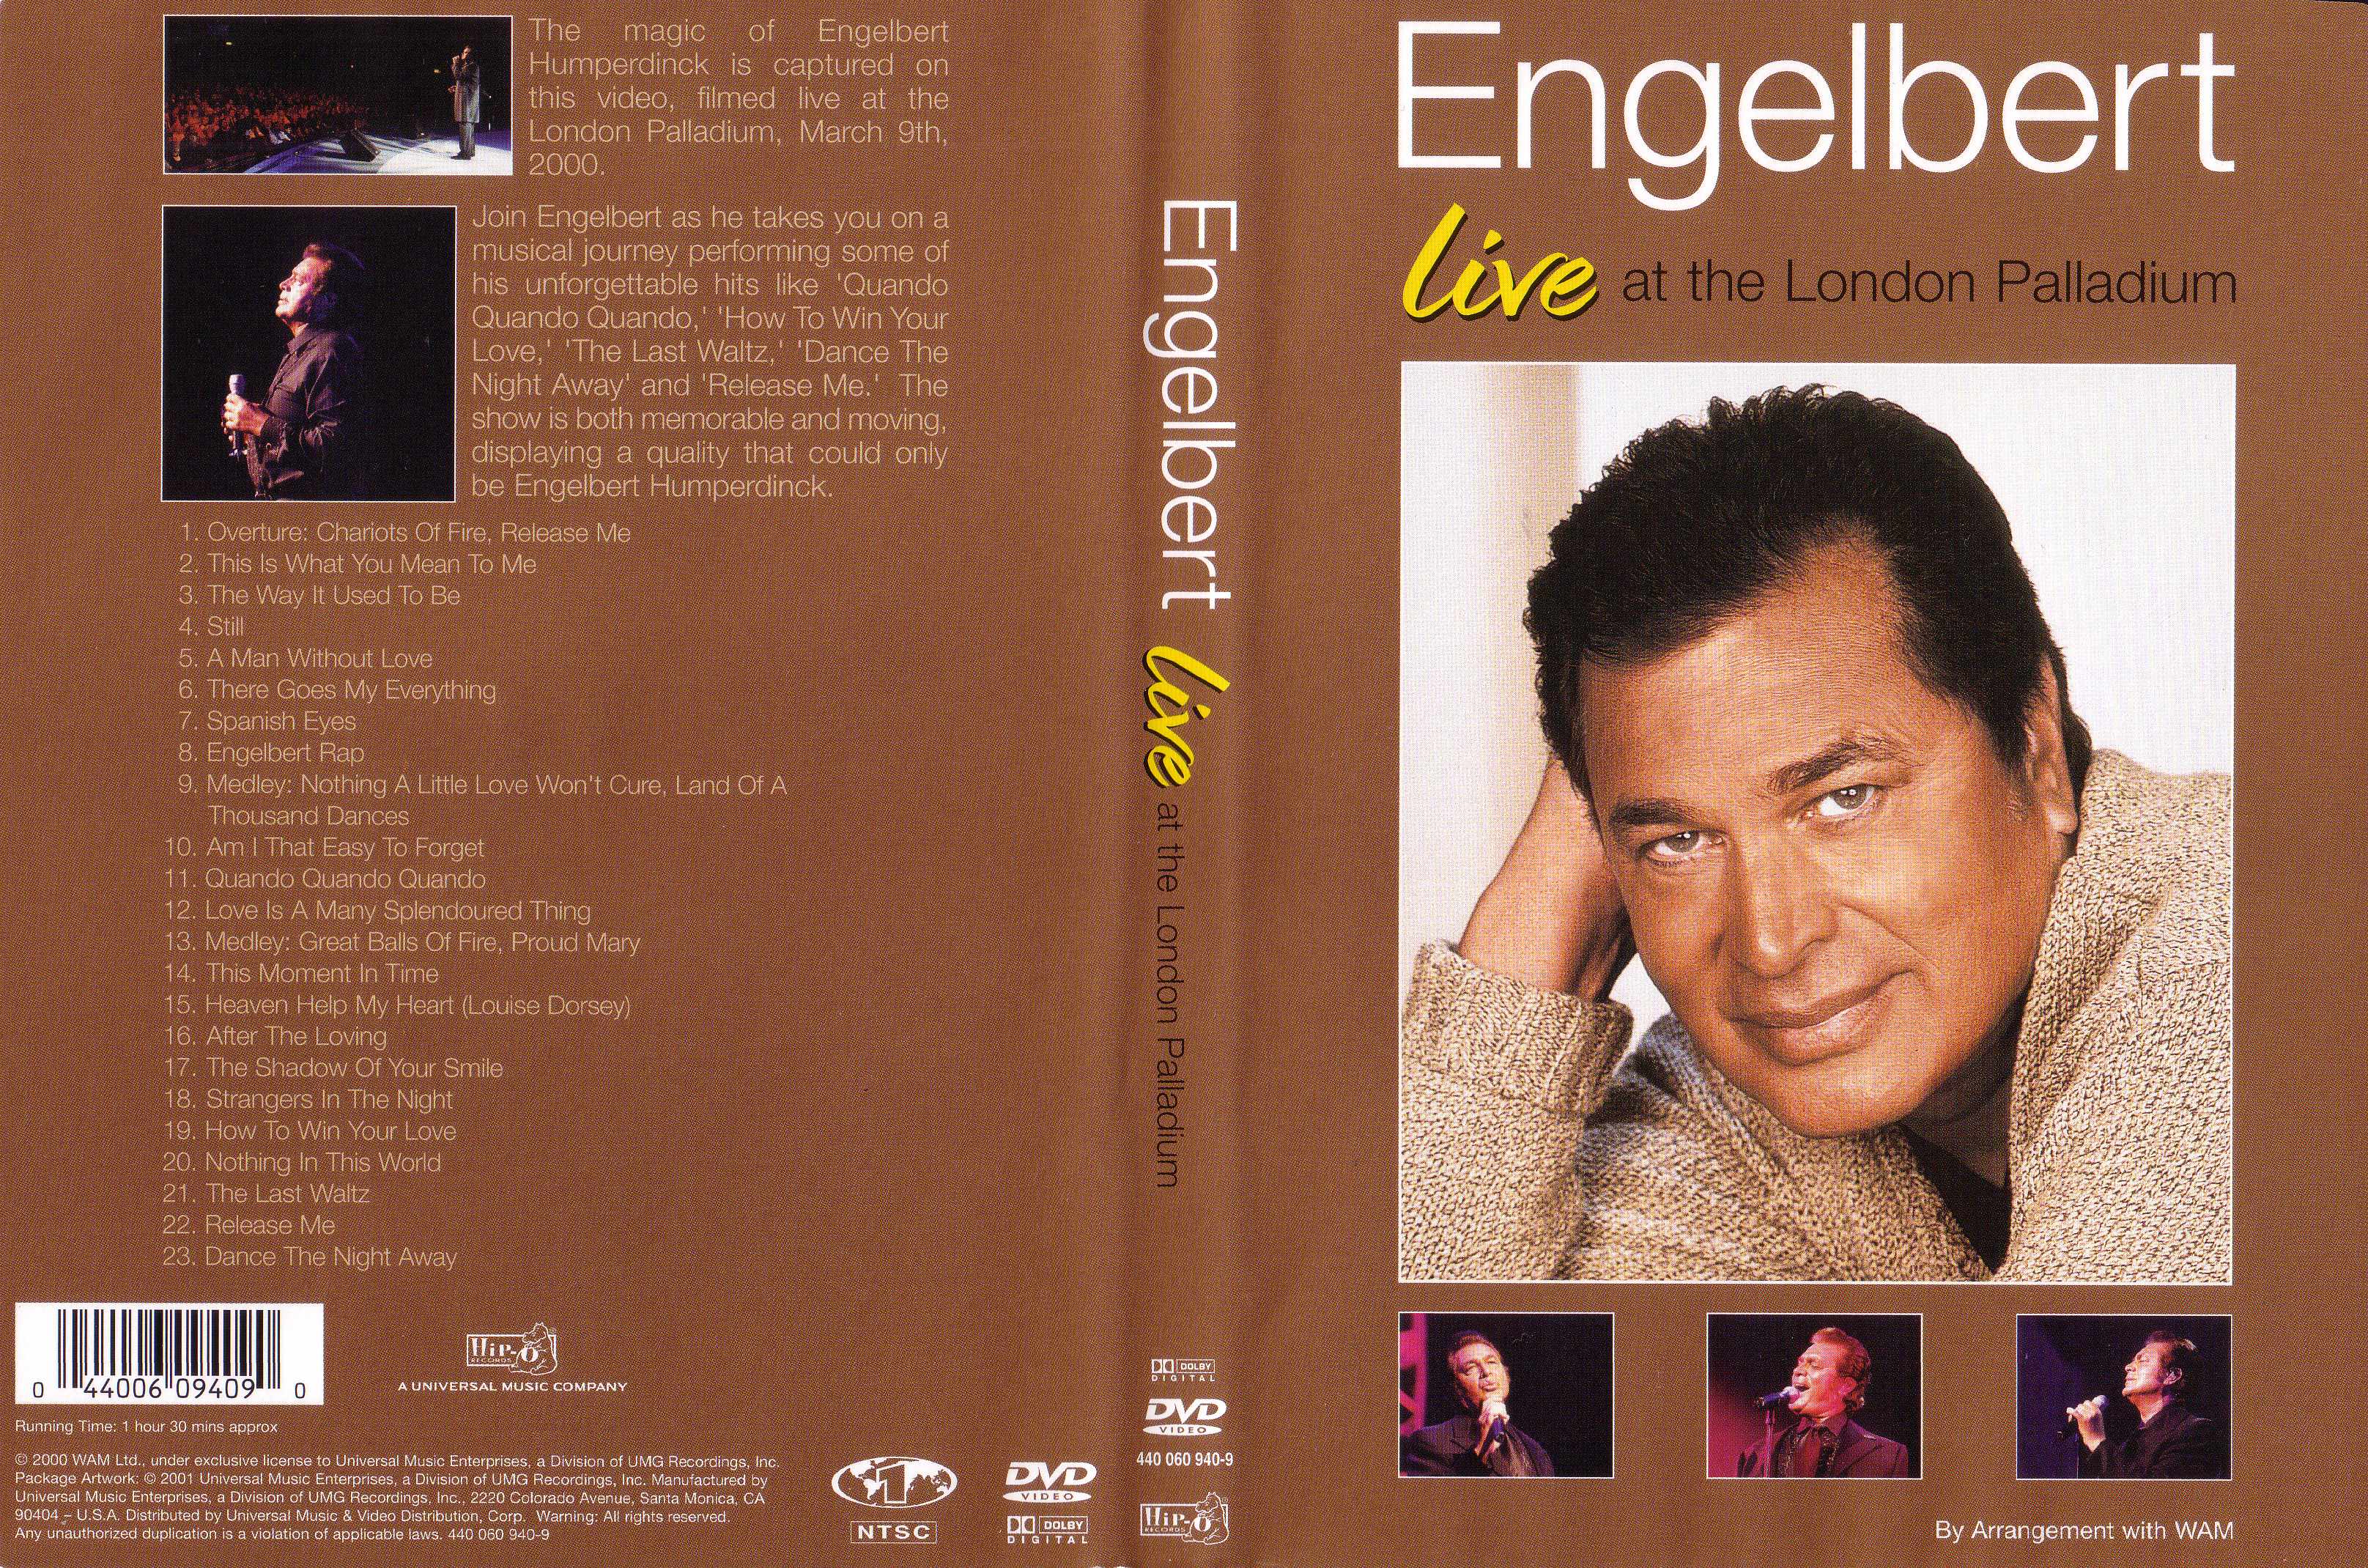 Jaquette DVD Engelbert Live at The London Palladium